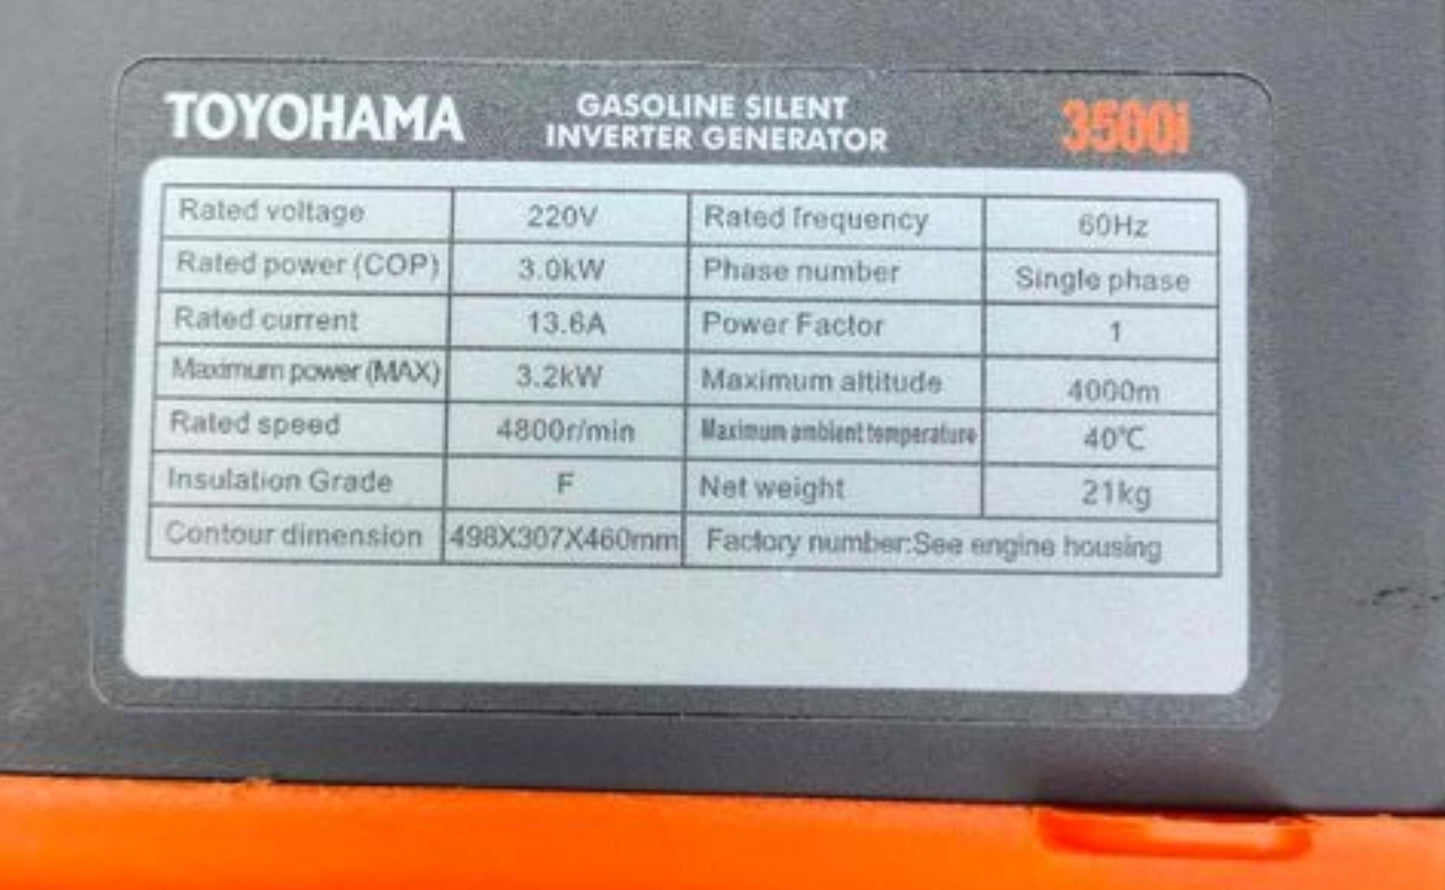 Toyohama Gasoline Silent Inverter Generator 3500i